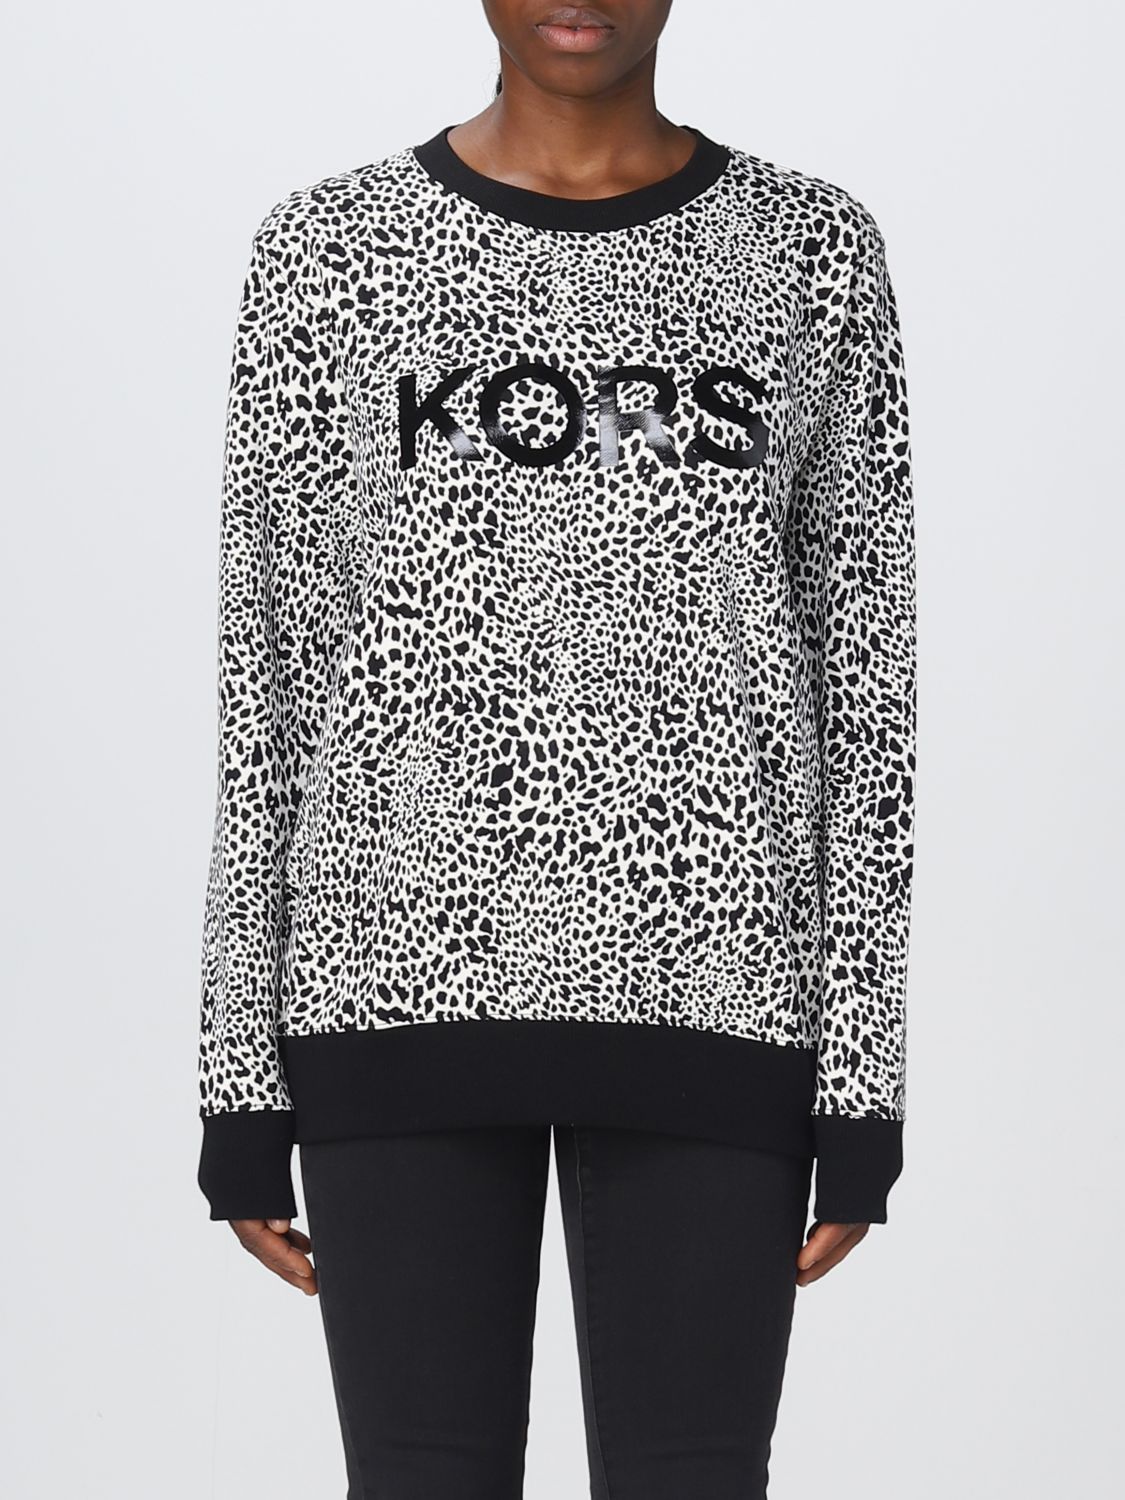 MICHAEL KORS: sweatshirt for women - Black | Michael Kors sweatshirt  MU250QN6FZ online on 